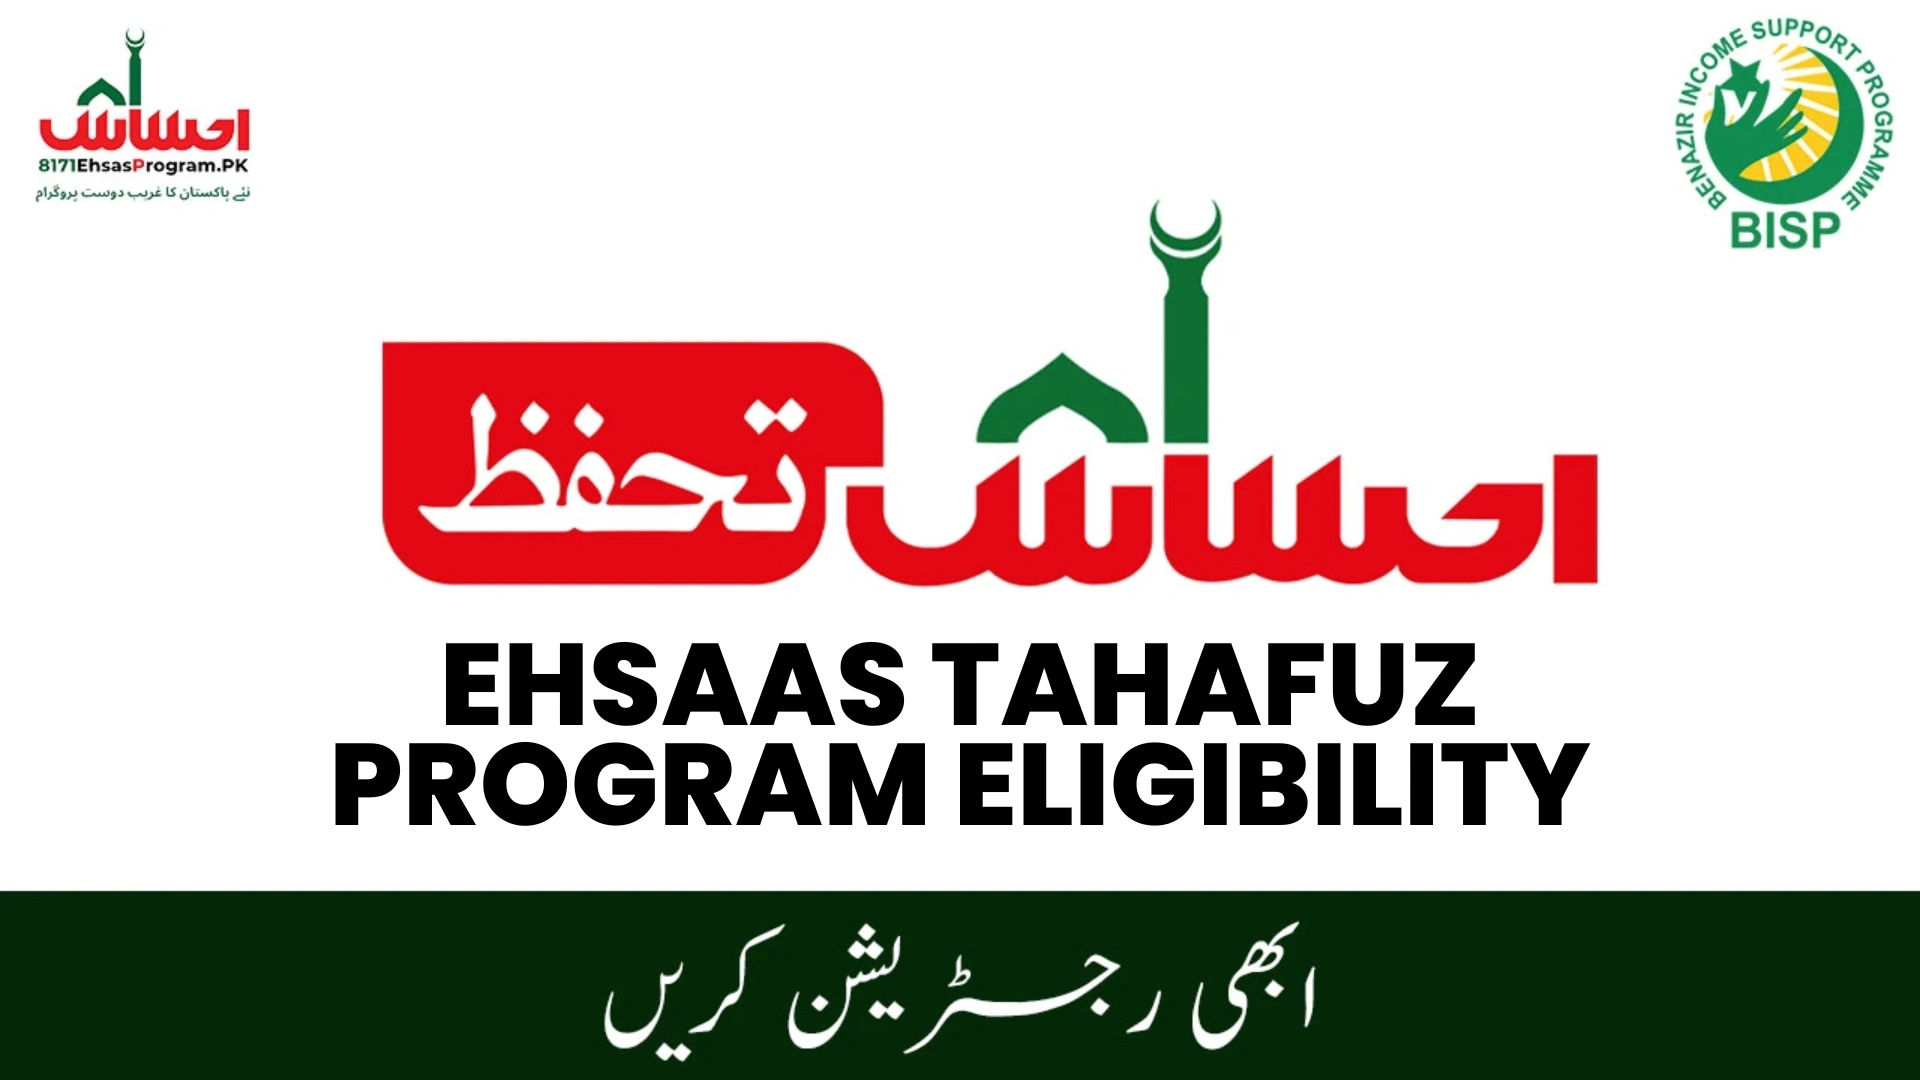 Ehsaas Tahafuz Program Eligibility